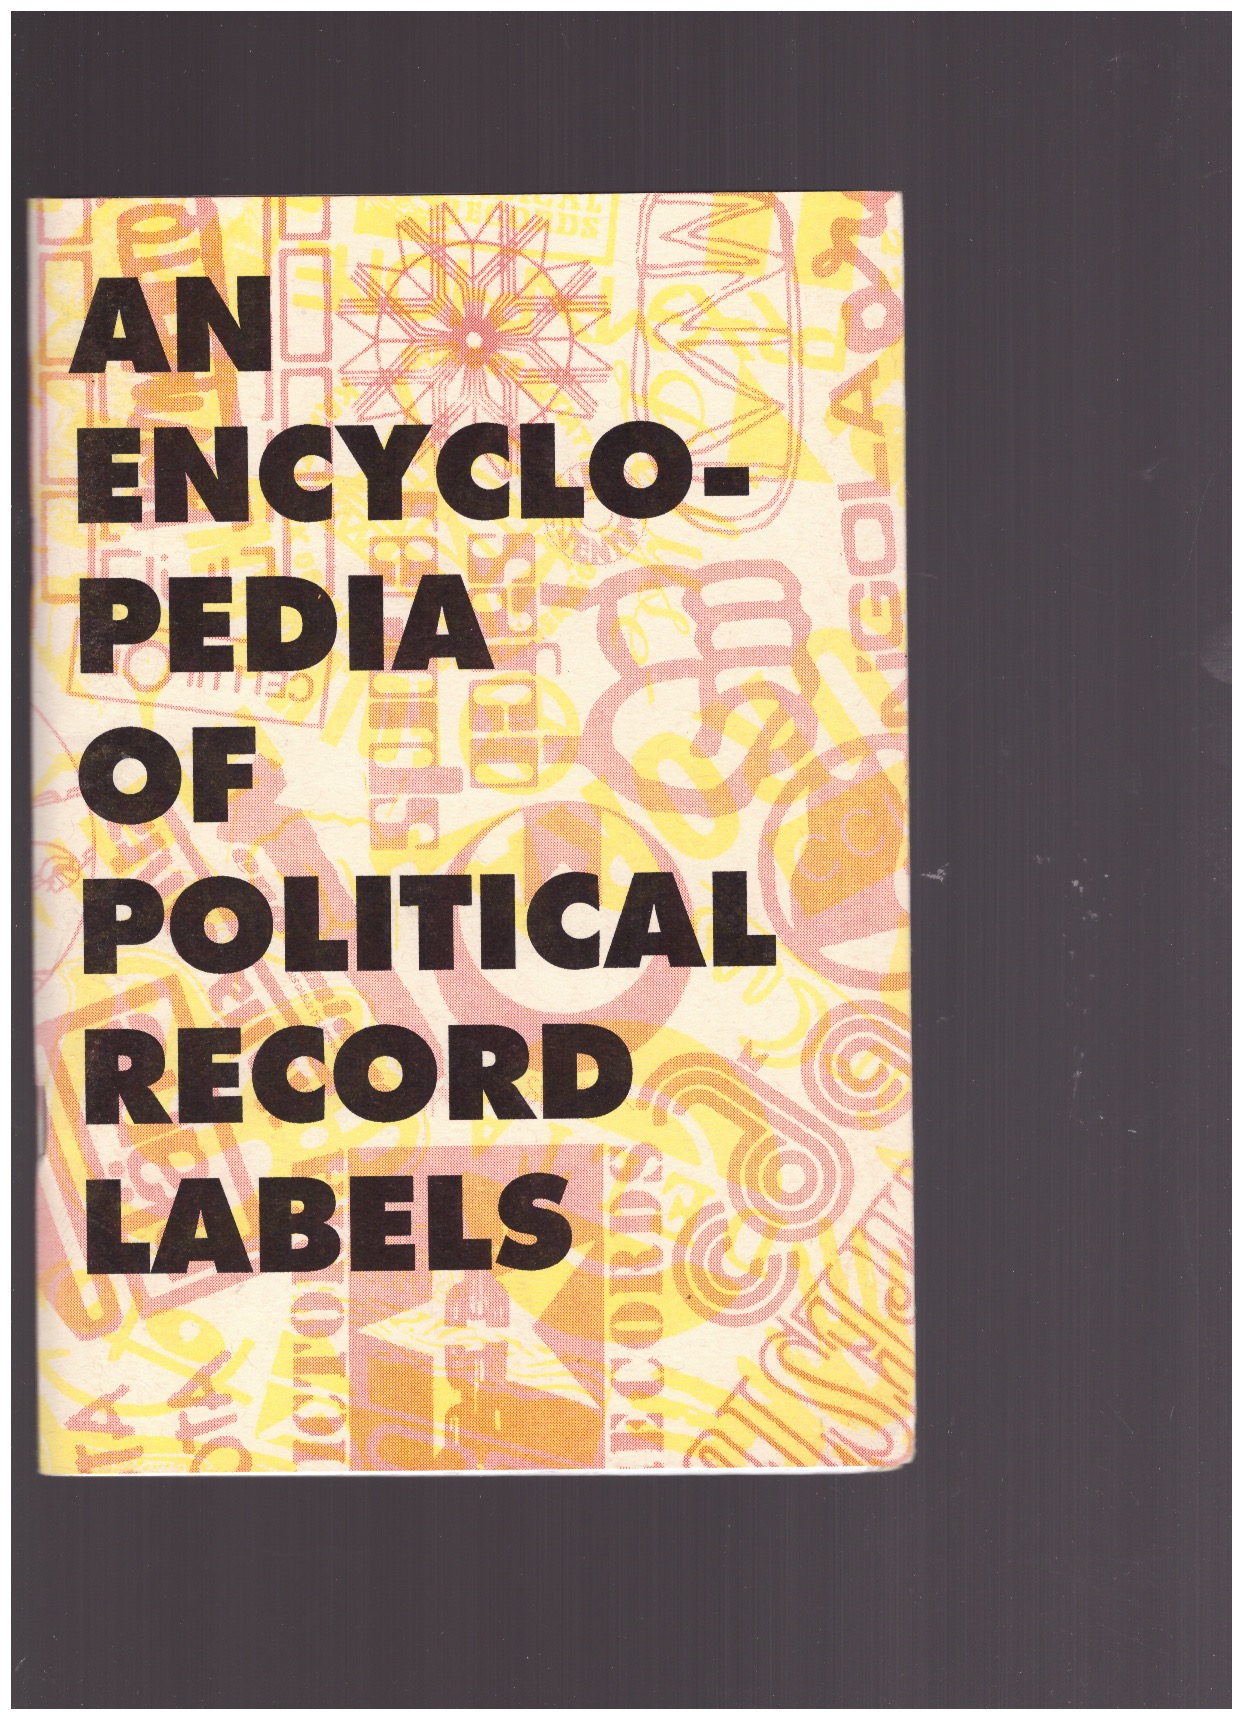 MACPHEE, Josh - An encyclopedia of political records labels by Josh MacPhee